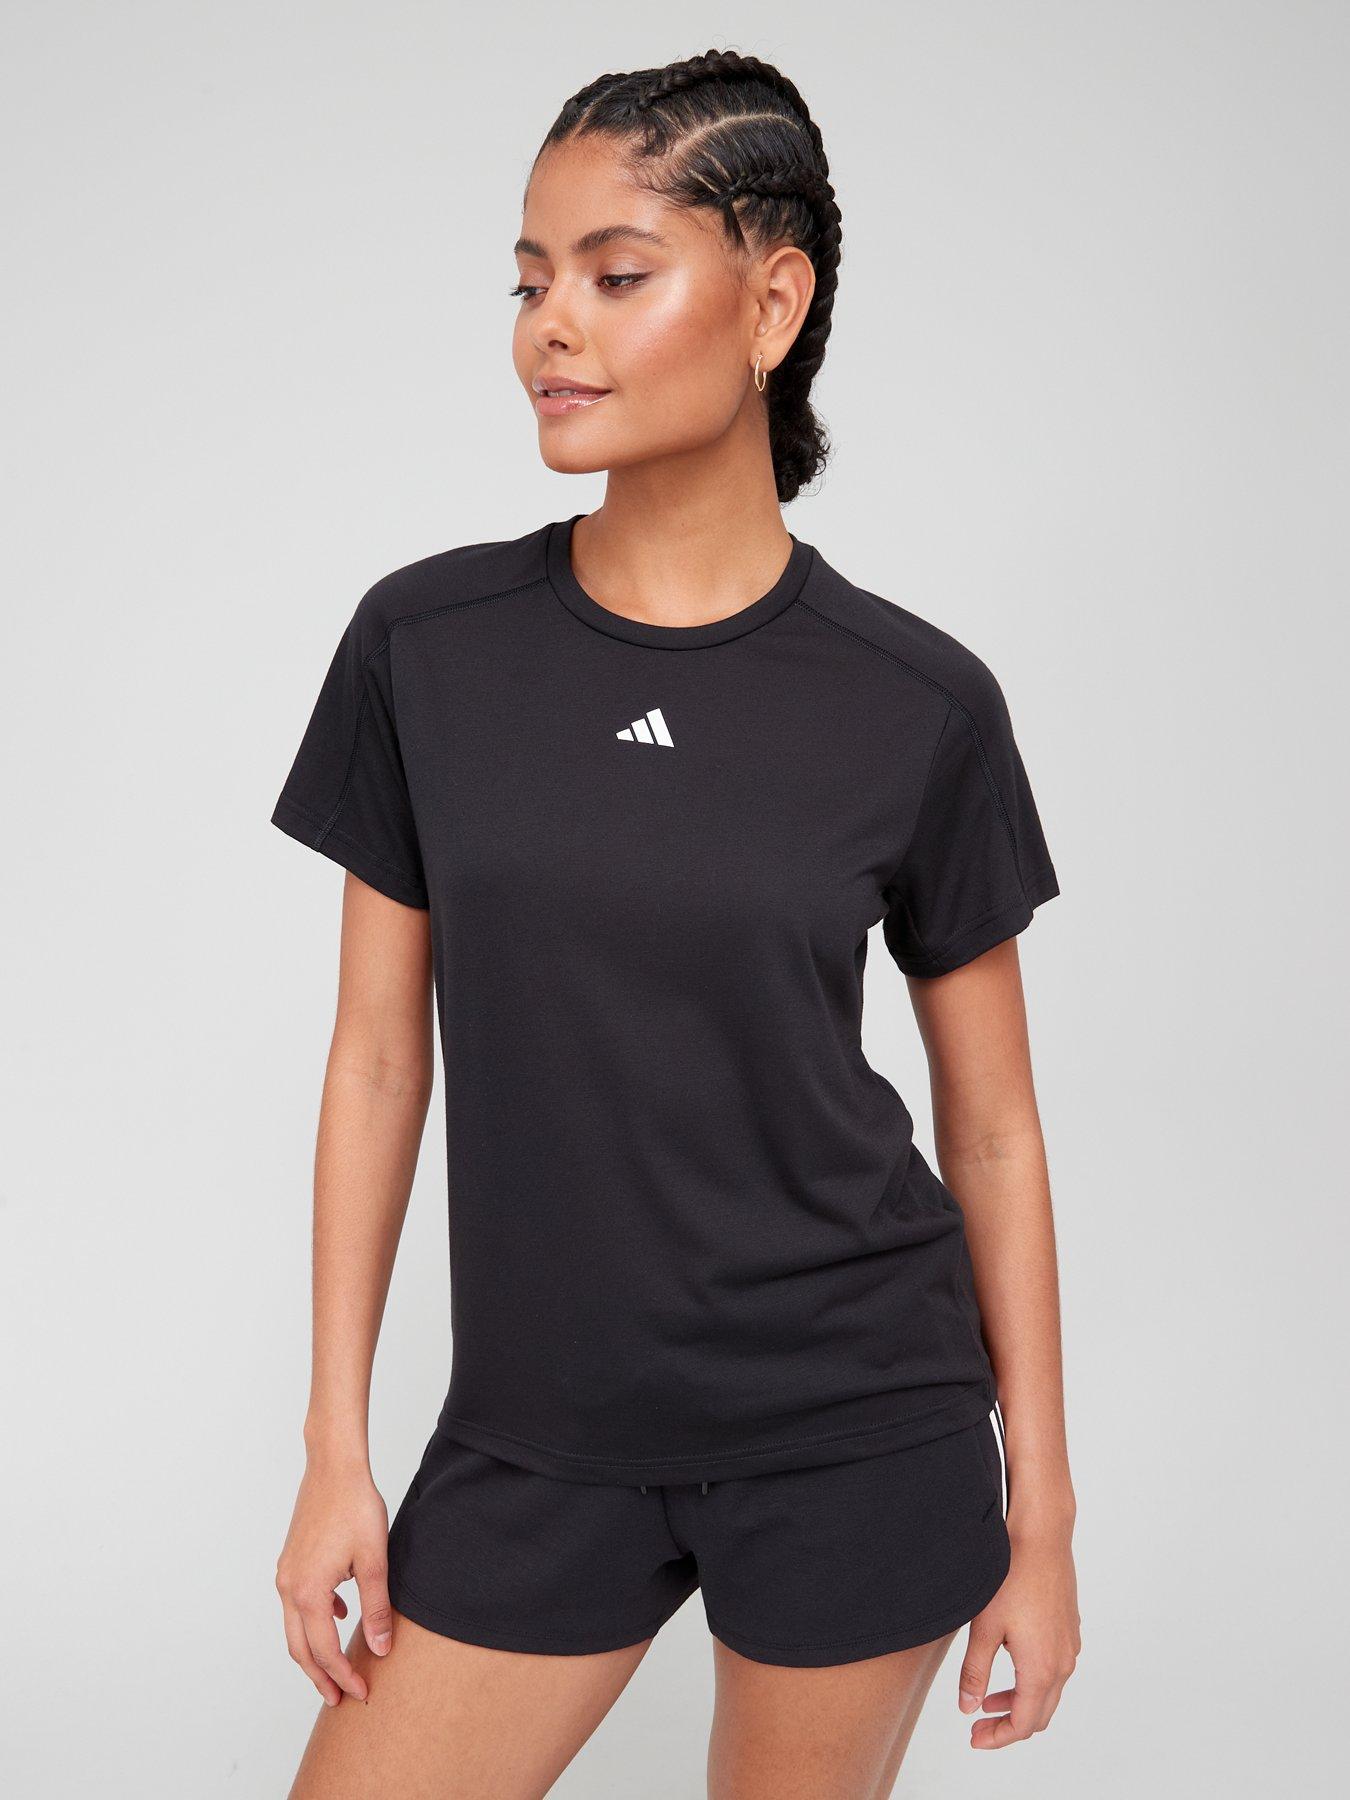 Adidas | Tops & t-shirts Women 